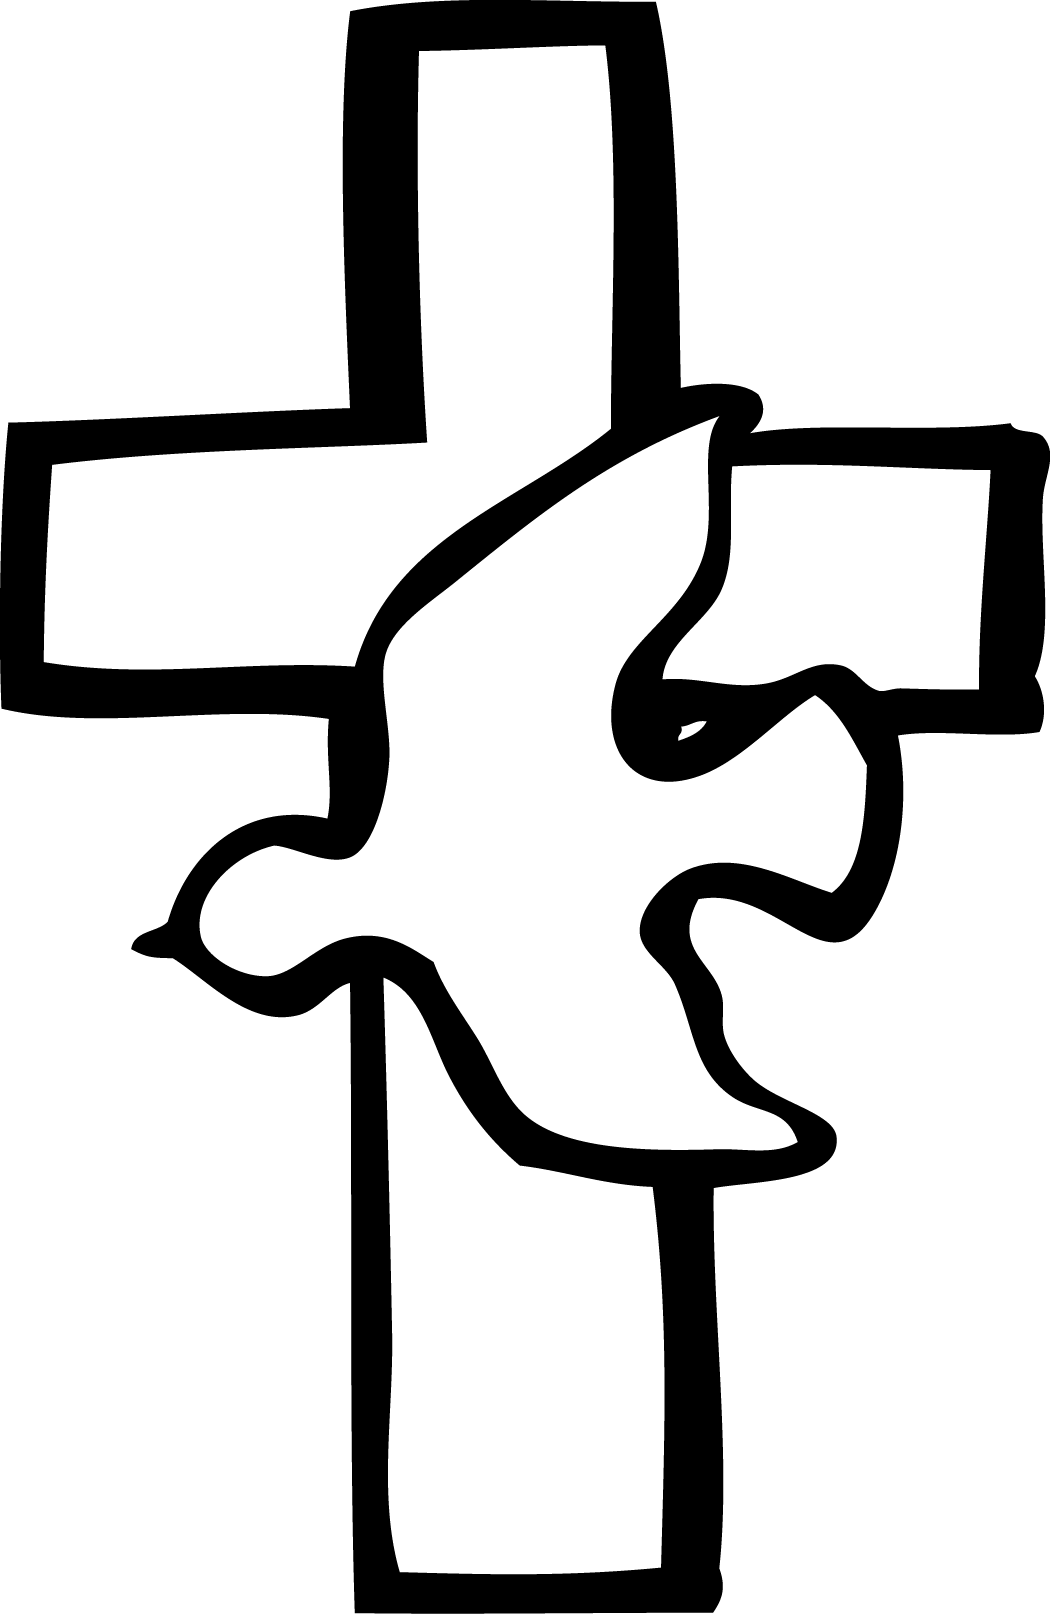 Free Image Of A Cross